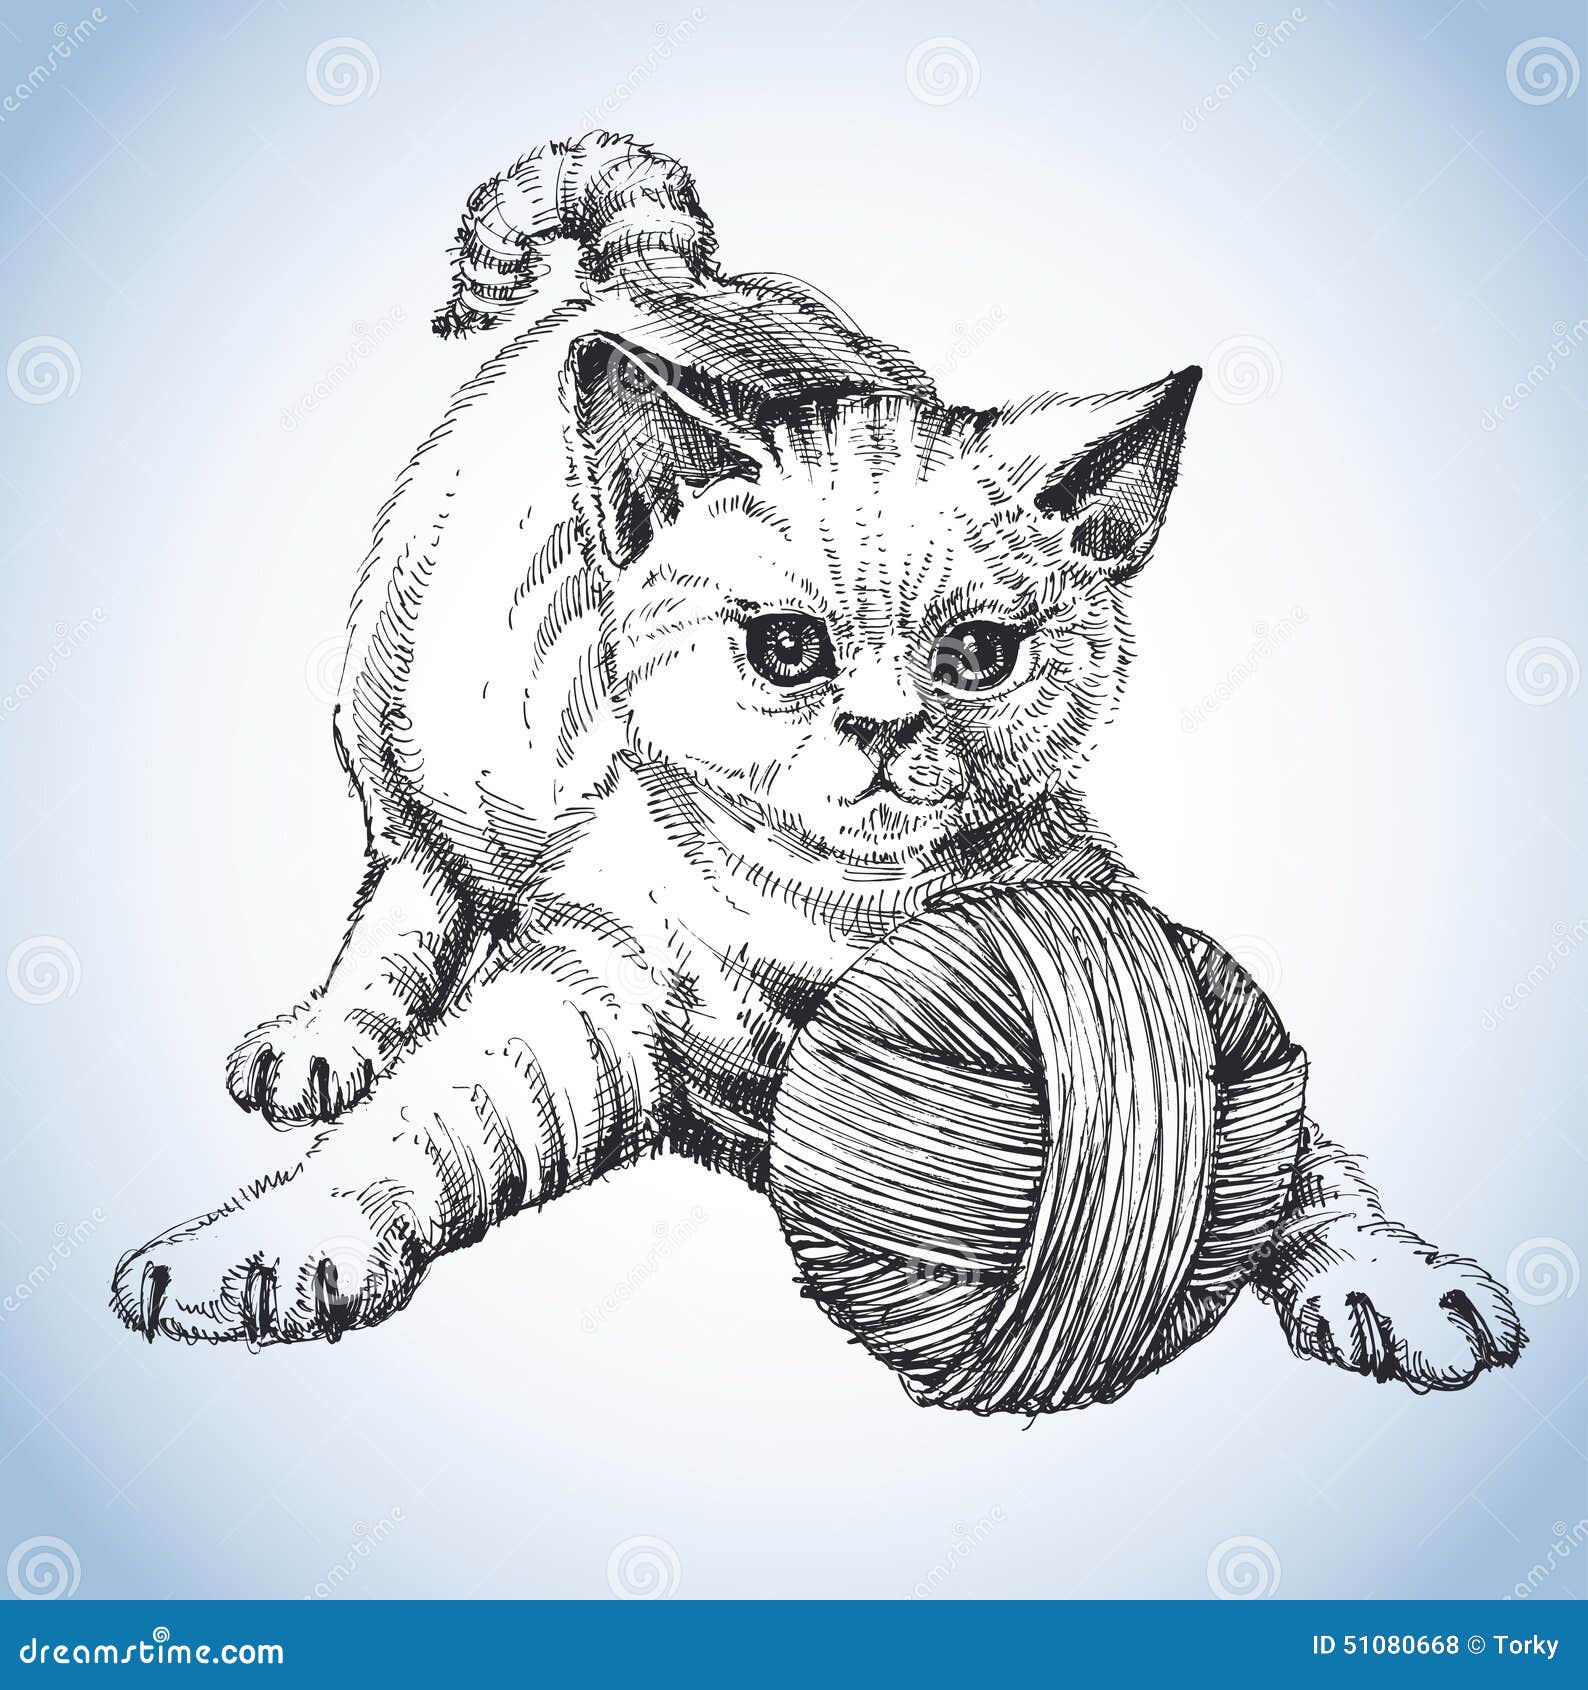 Cute cat stock vector. Illustration of hand, head, ears - 51080668